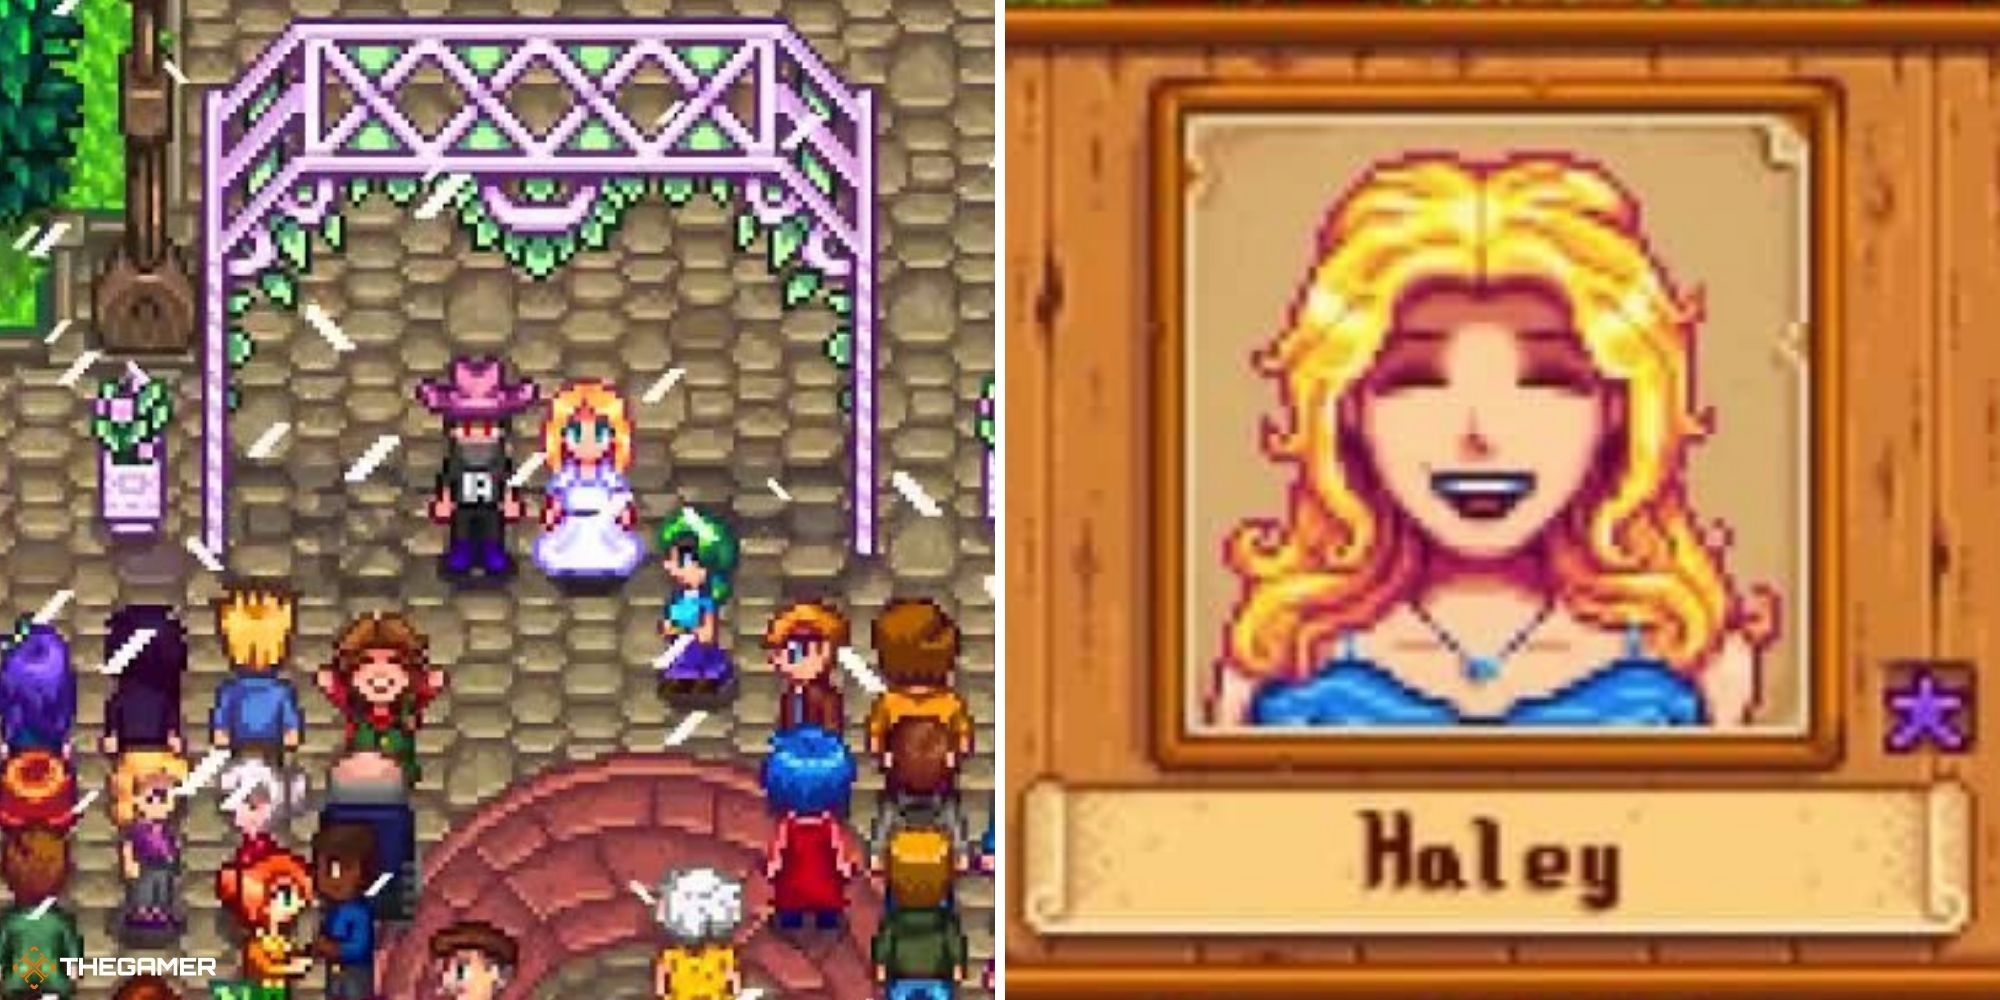 Stardew Valley - Haley's wedding (left), Haley's portrait (right)